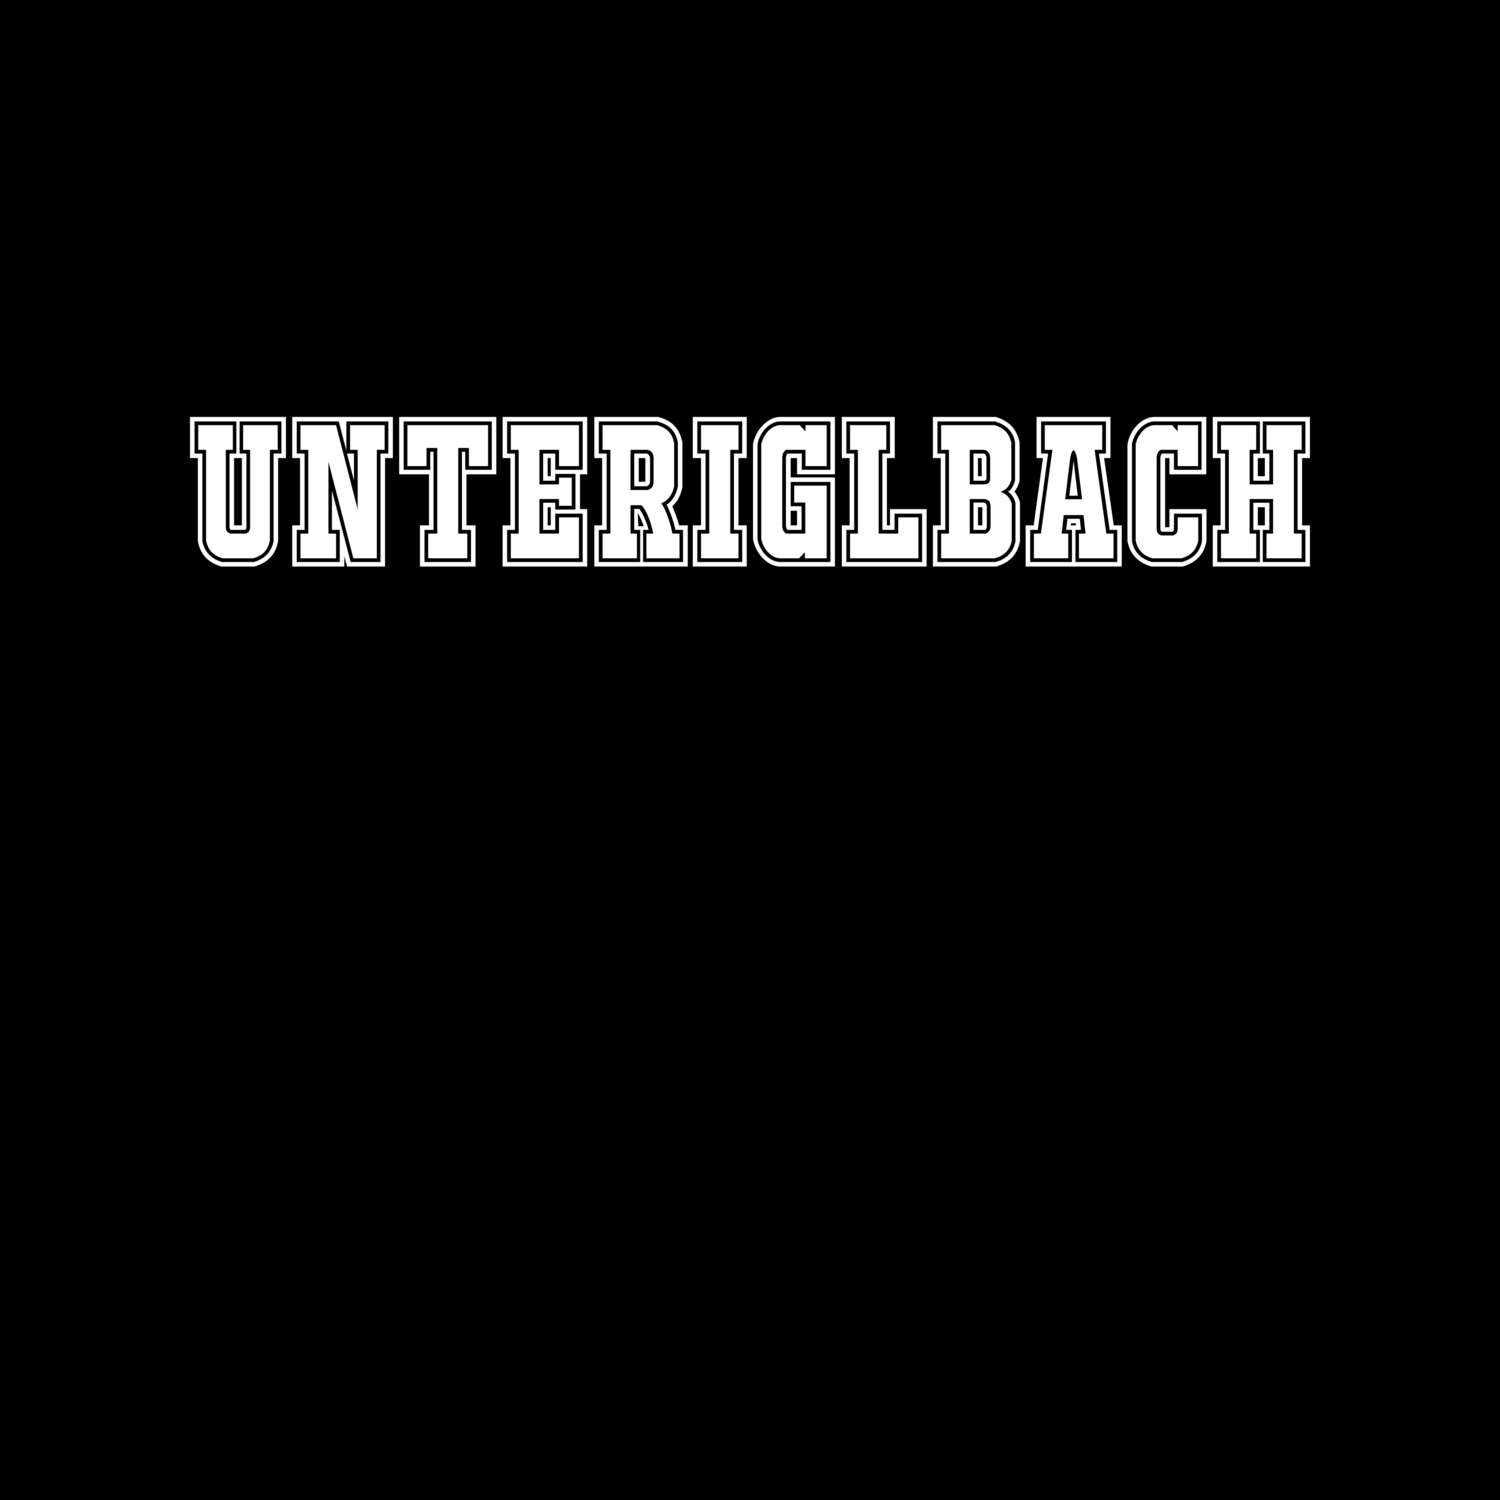 Unteriglbach T-Shirt »Classic«